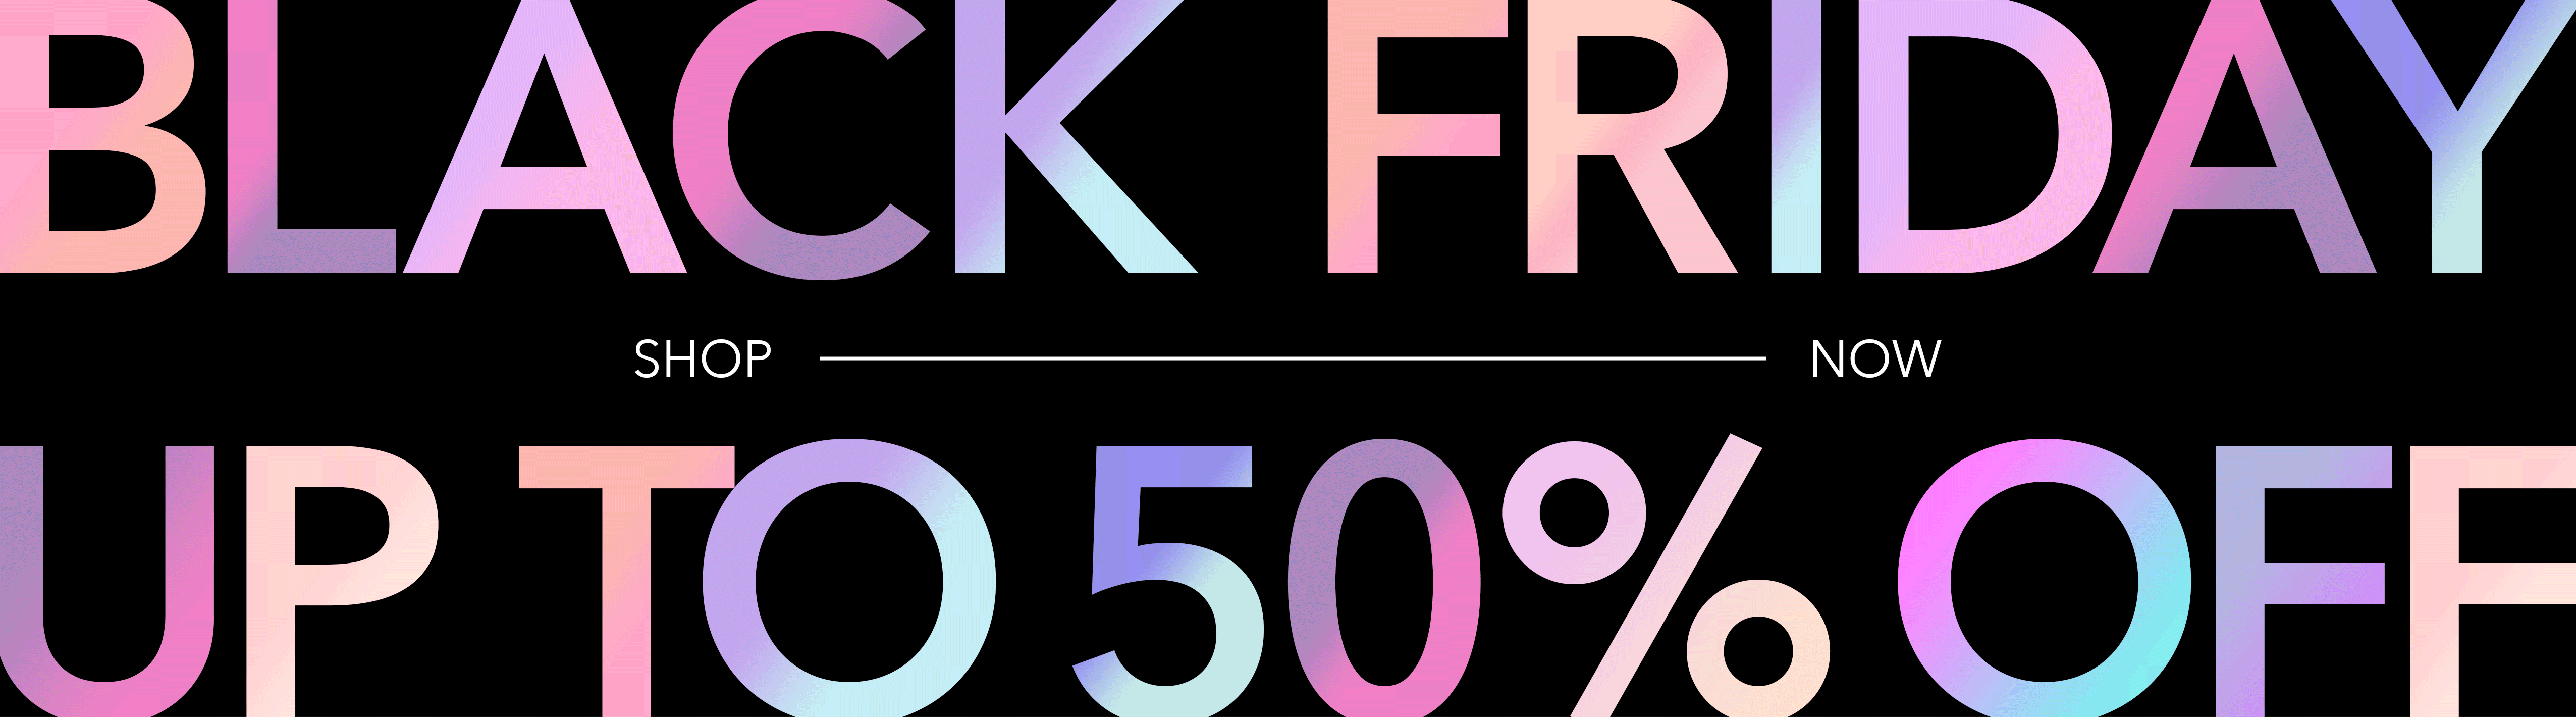 Black Friday Sale, Shop up to 50% off